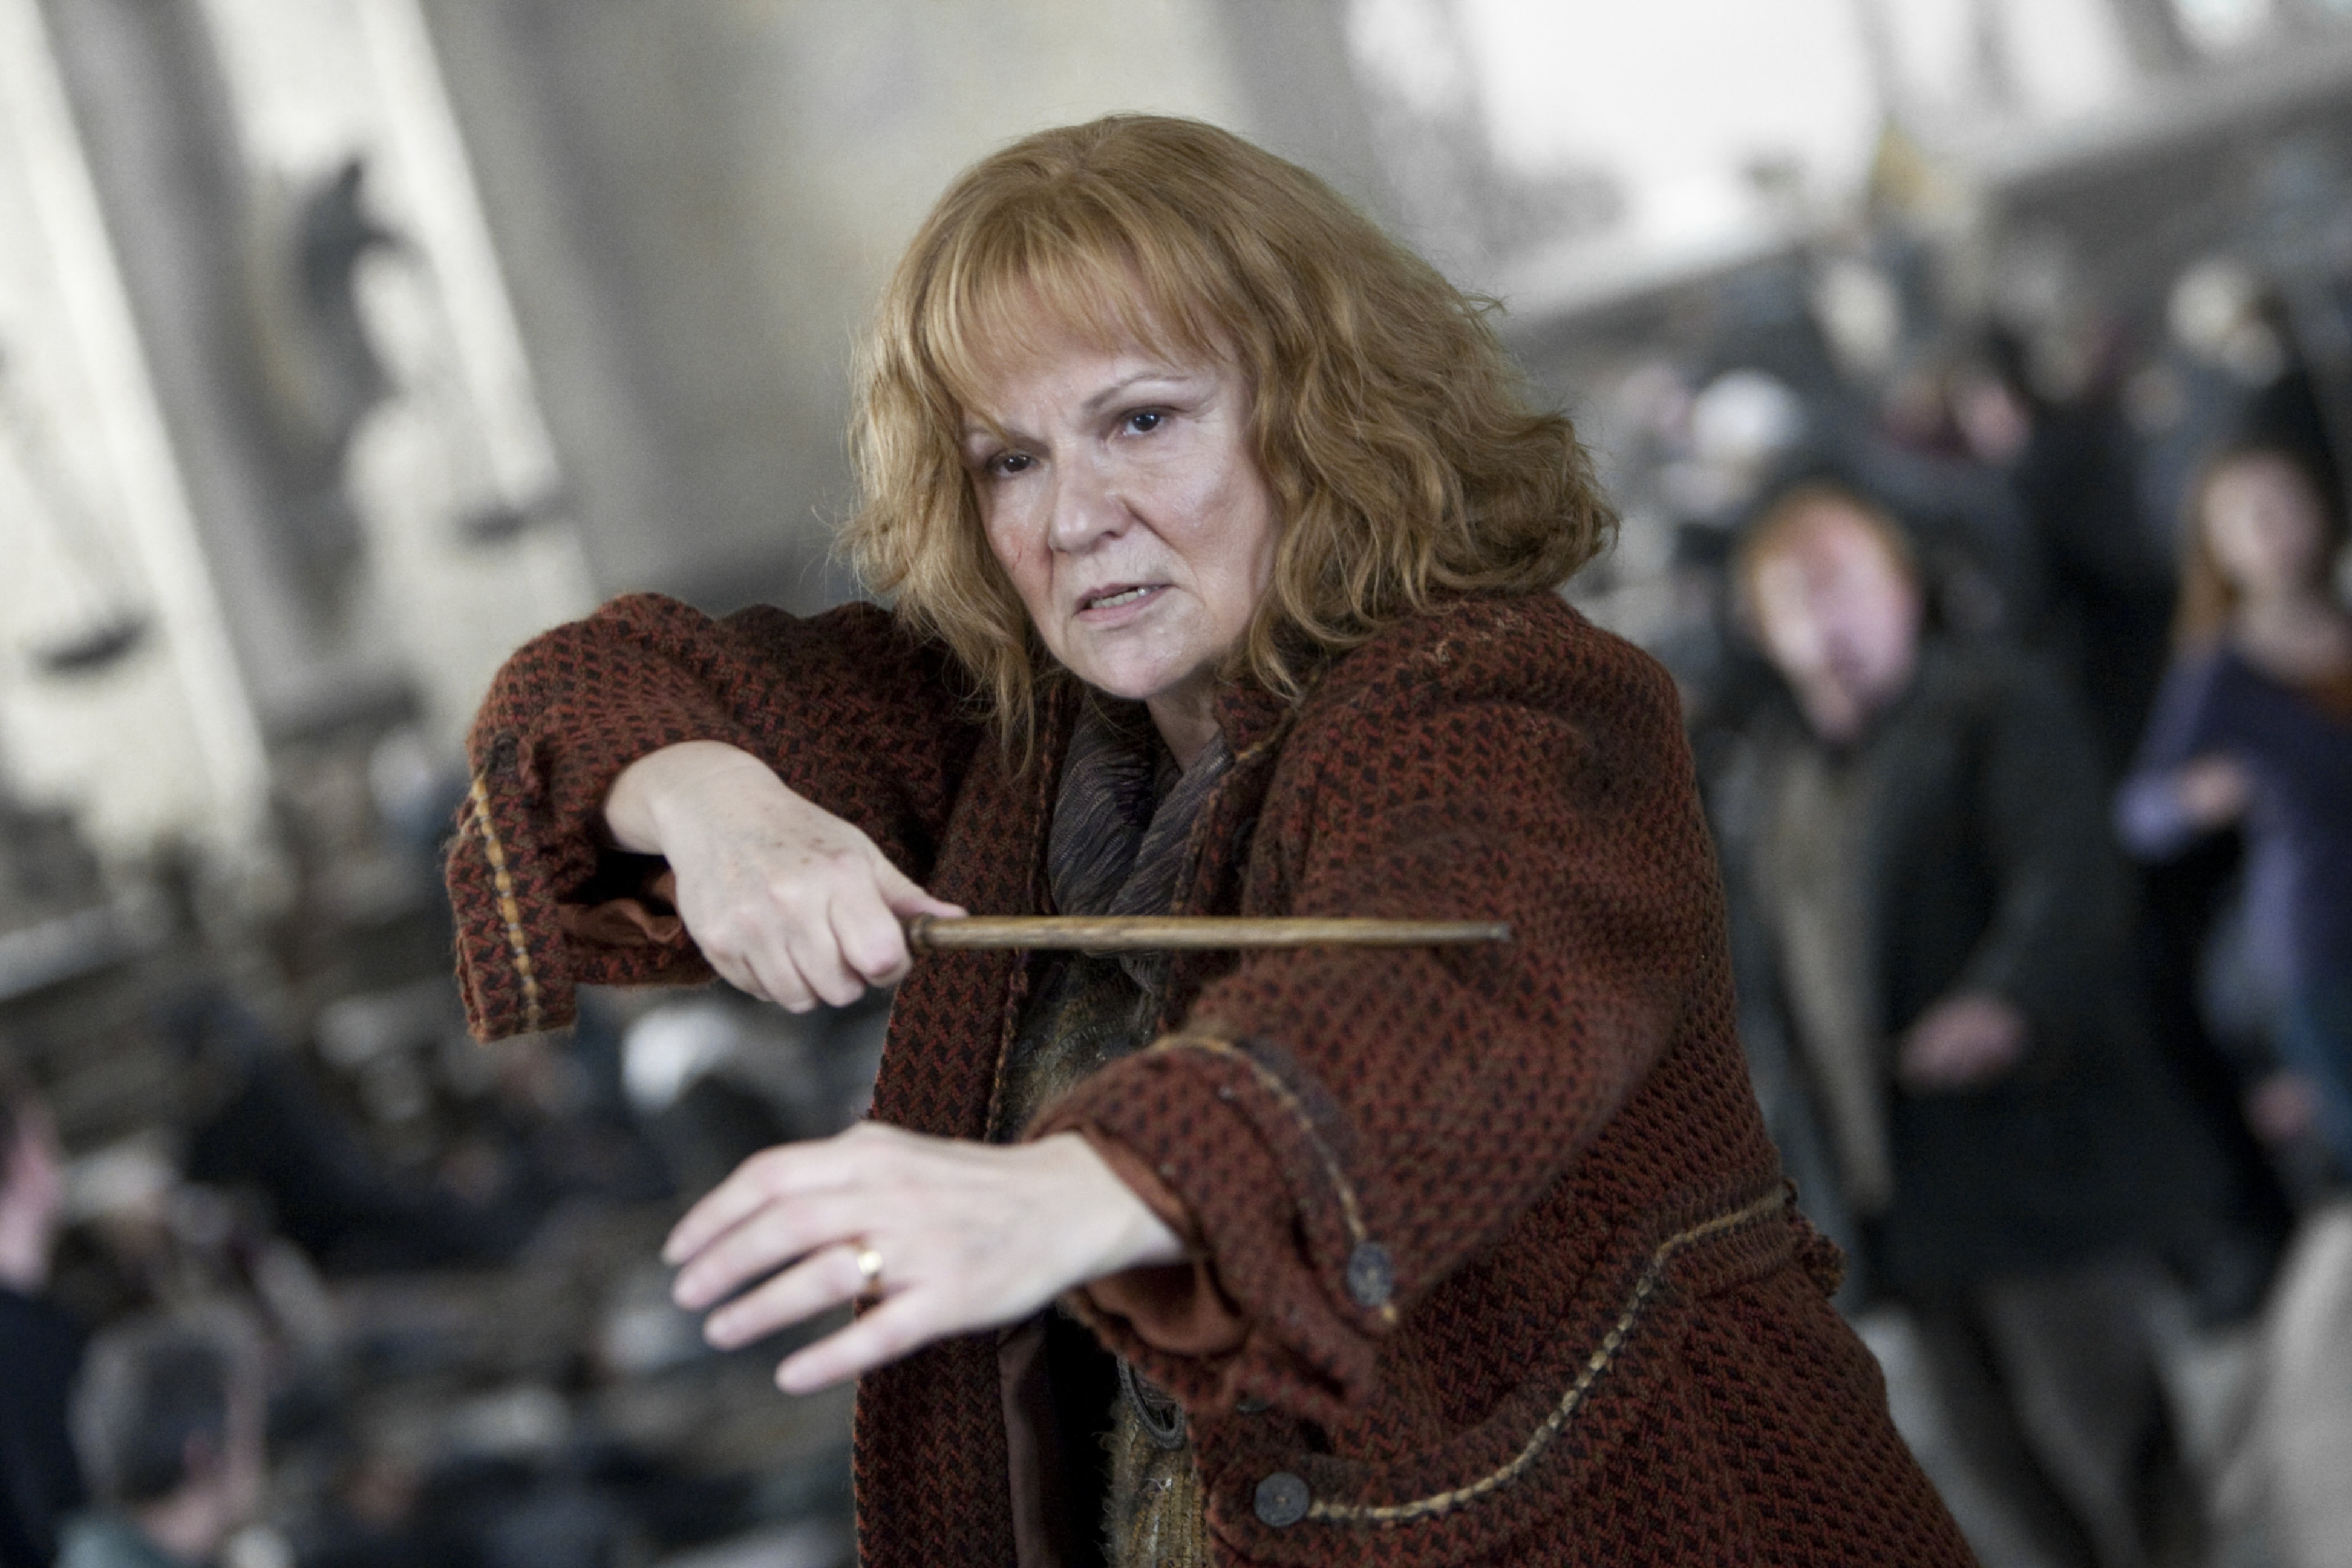 Molly Weasley brandishes her wand, ready to battle Bellatrix Lestrange.